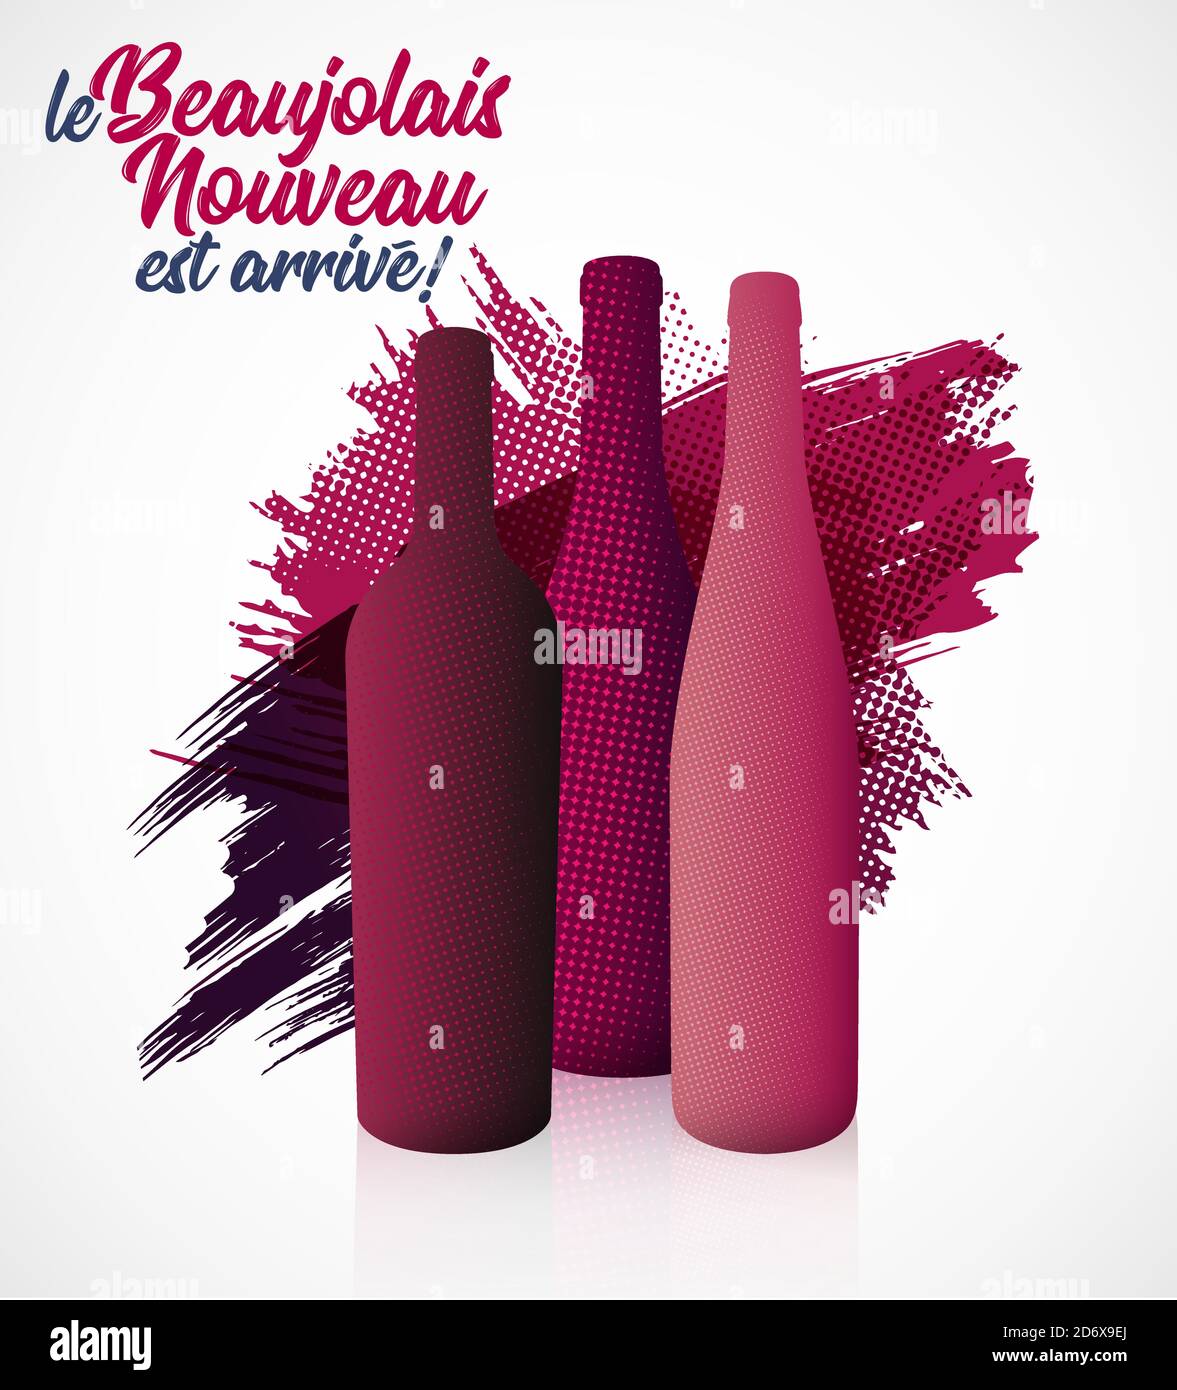 Illustration with volume of wine bottles. text in French 'le Beaujolais Nouveau est arrivé', the new Beaujolais has arrived. Illustration for wine eve Stock Vector